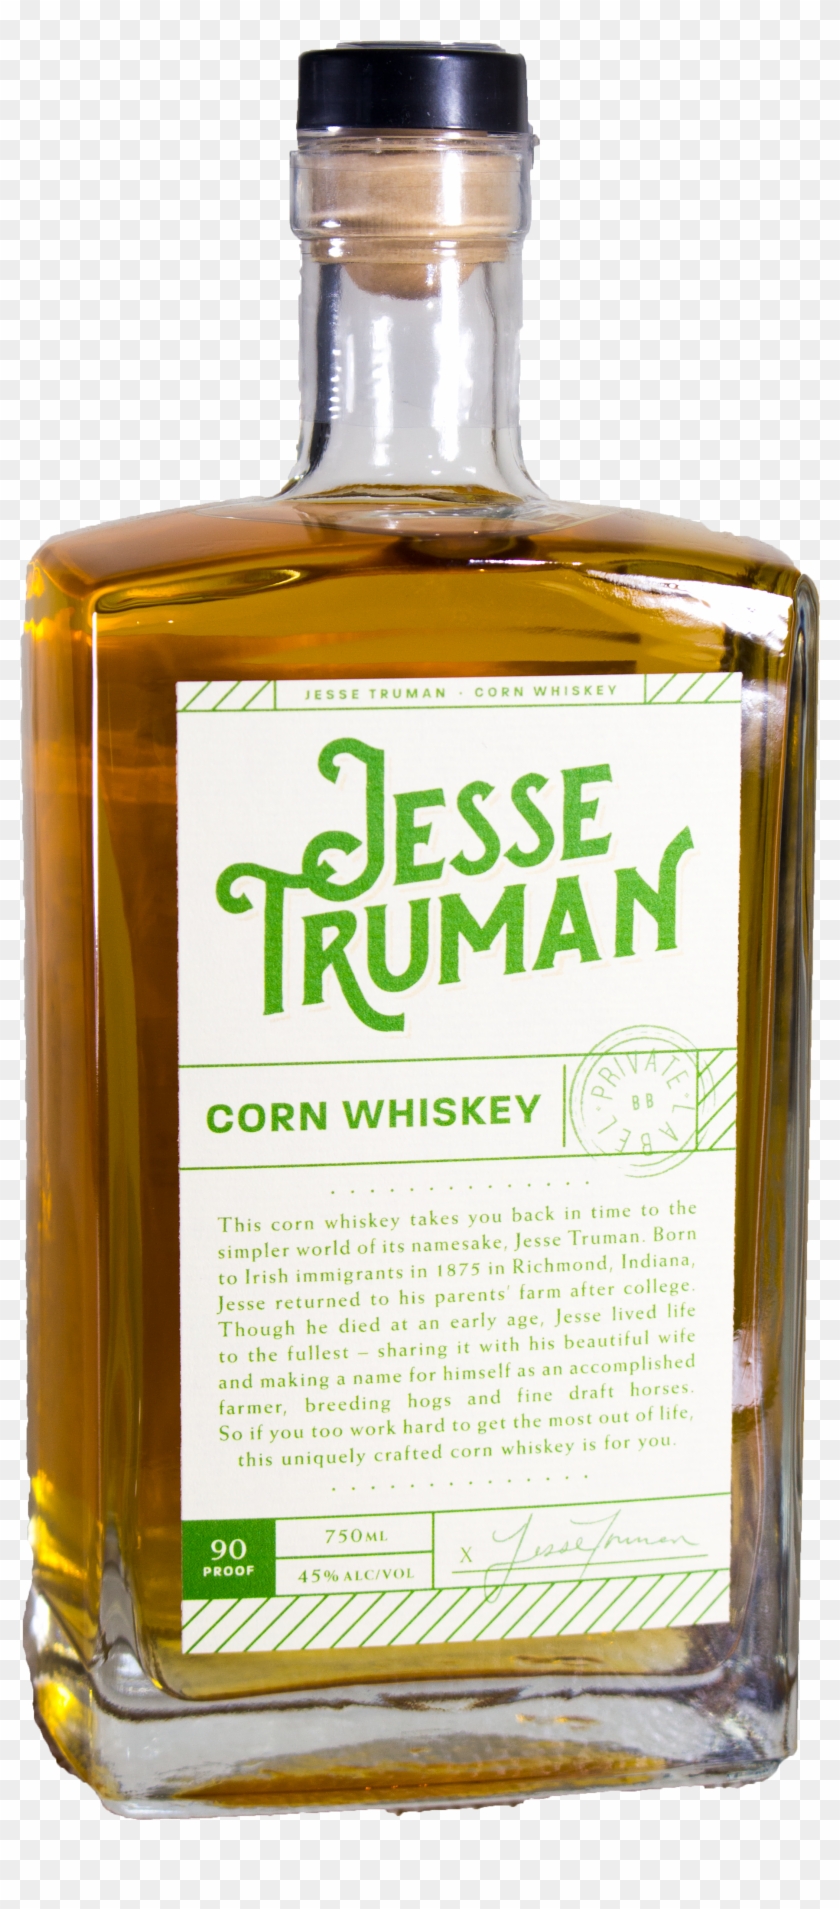 Jesse Truman Corn Whiskey - Whisky Clipart